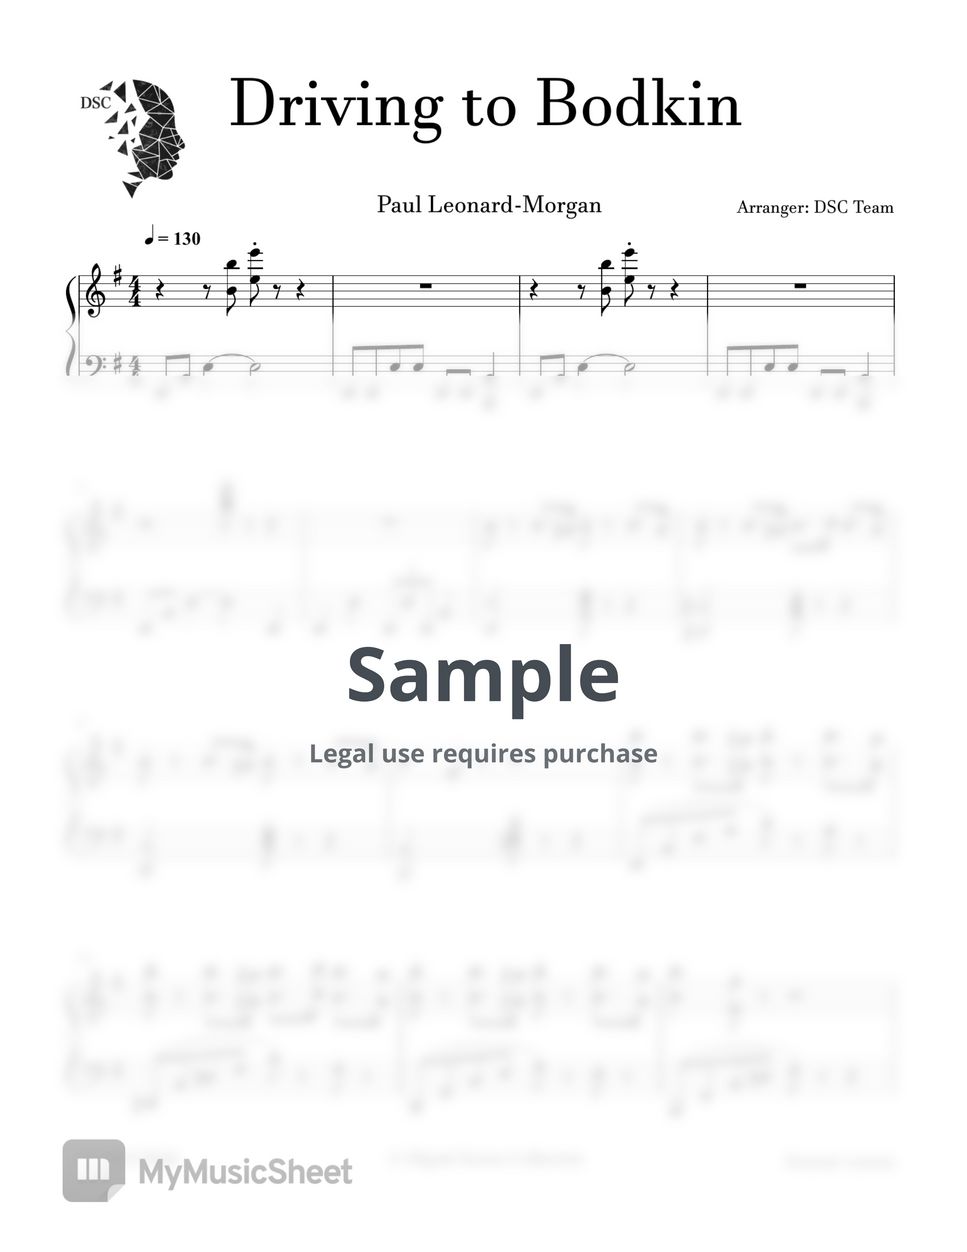 Paul Leonard-Morgan - Driving to Bodkin (OST Bodkin) by Digital Scores Collection